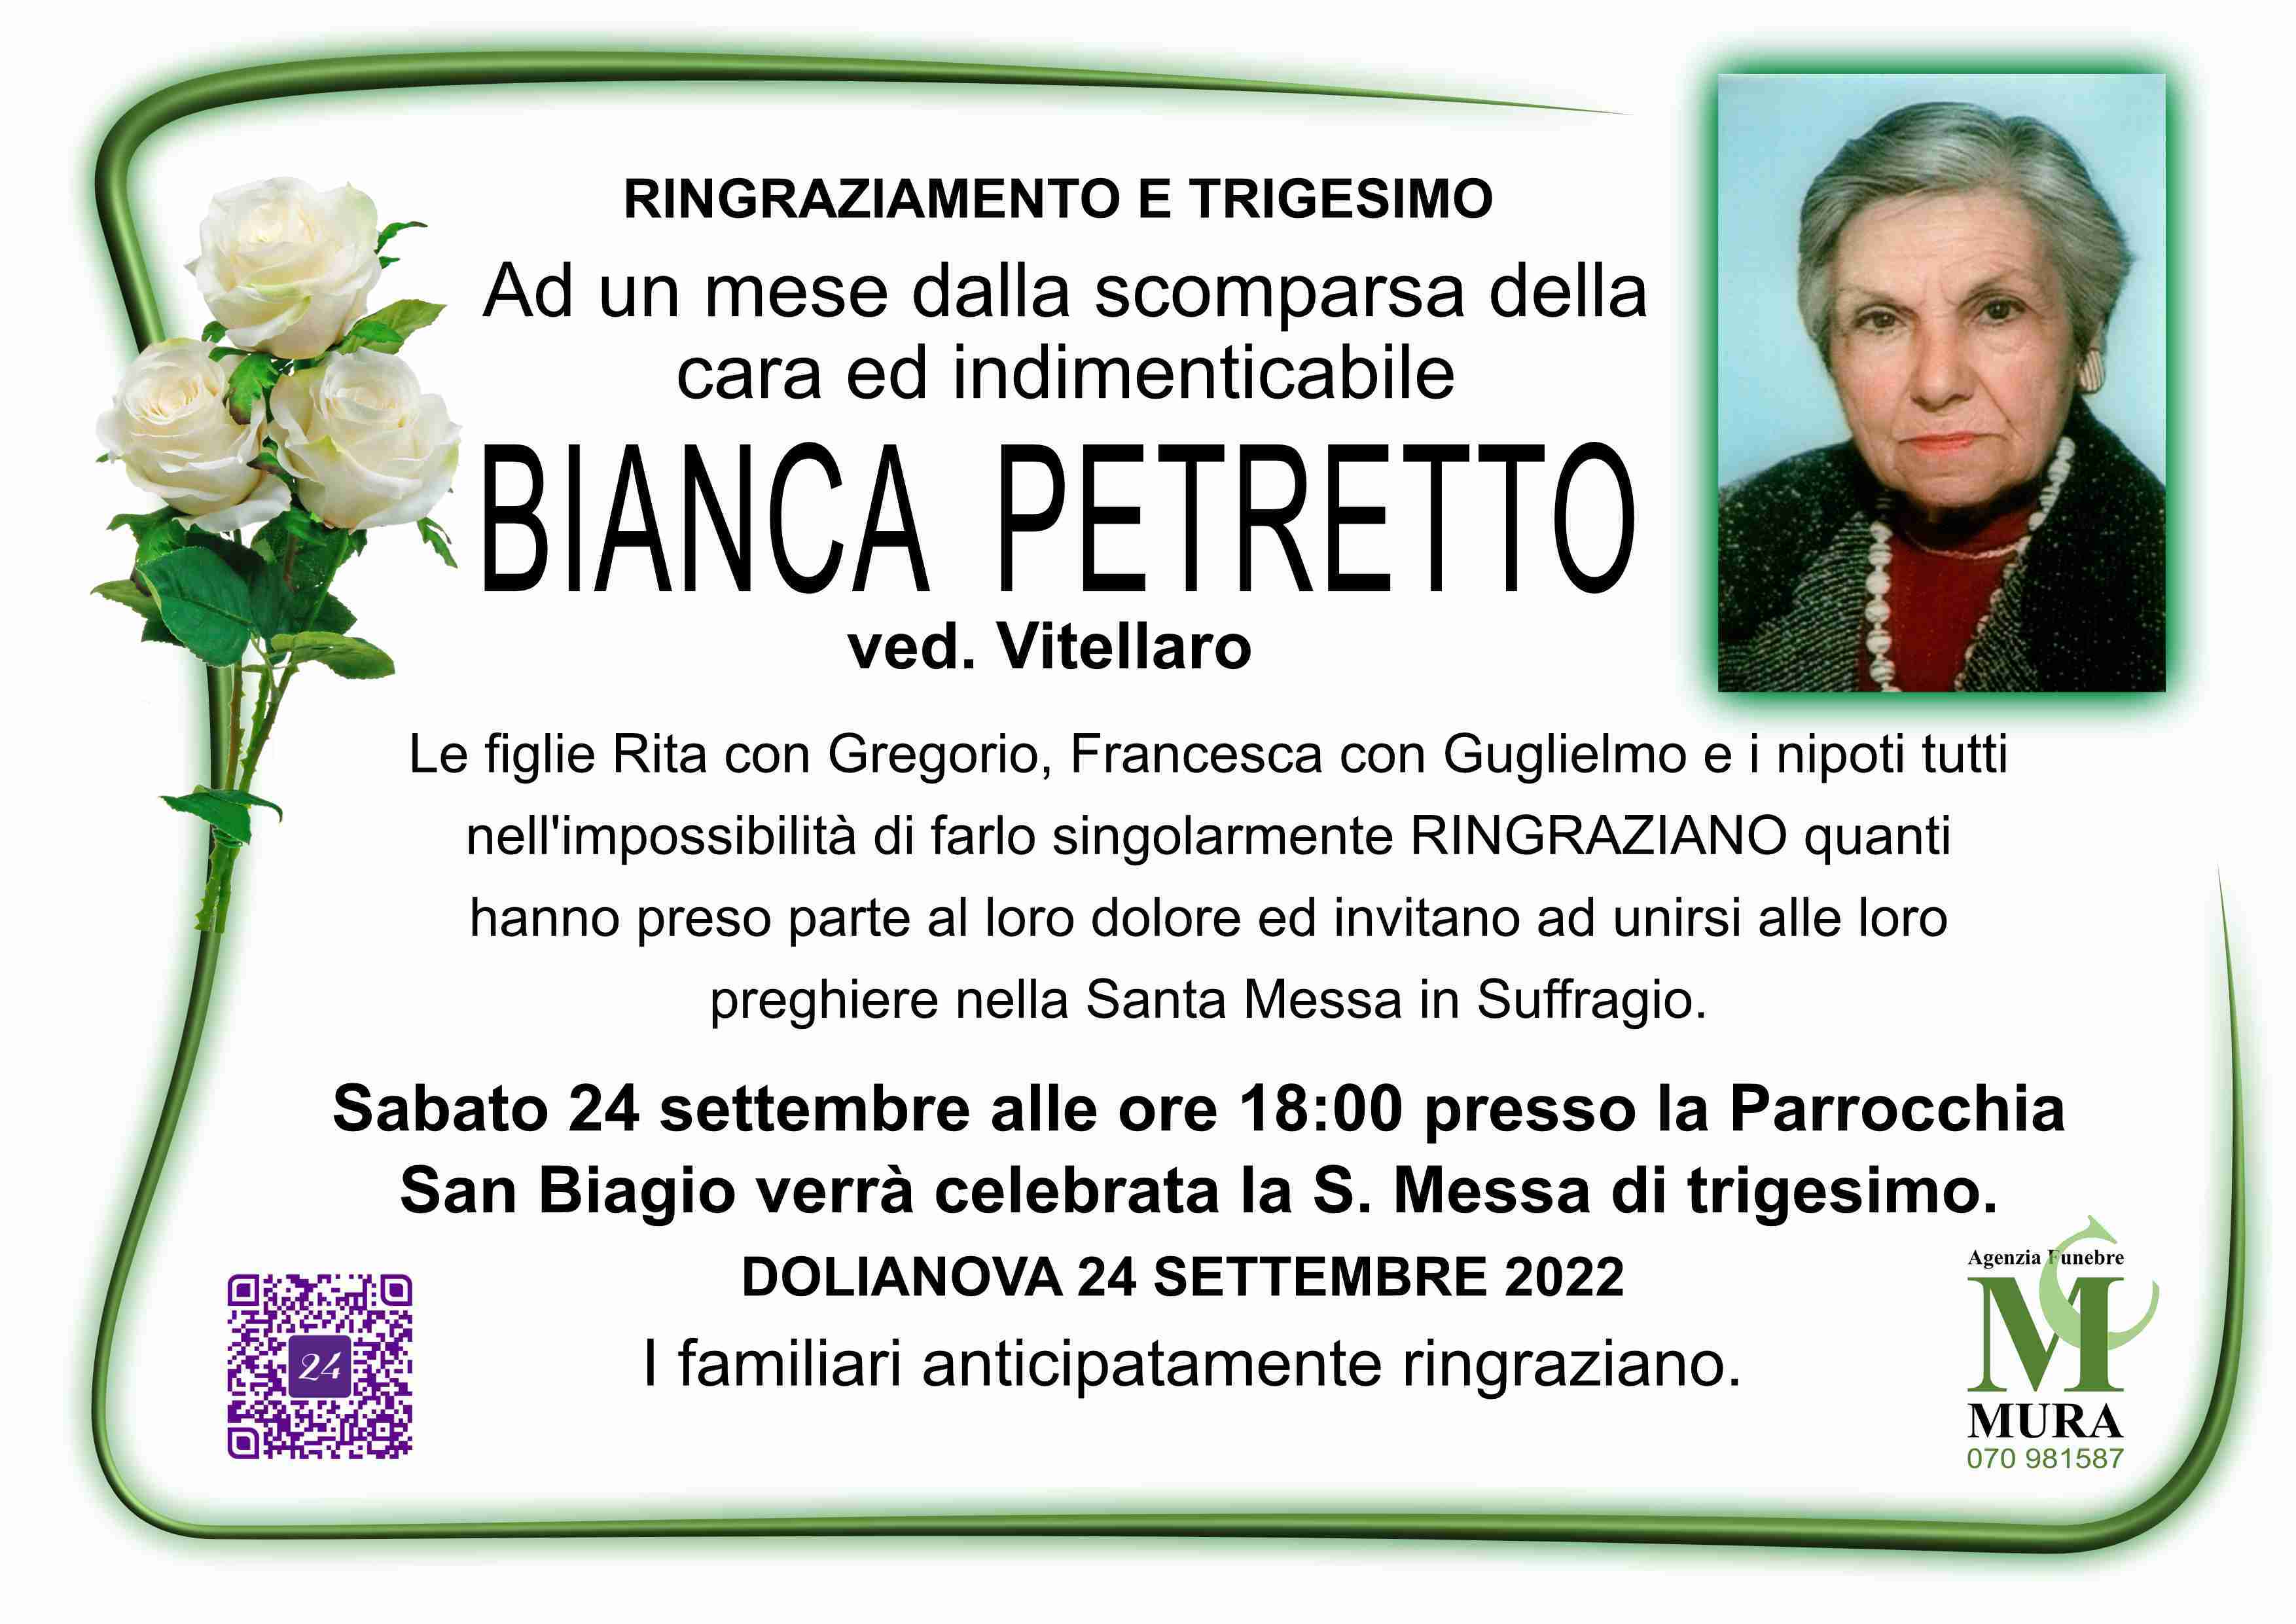 Bianca Petretto